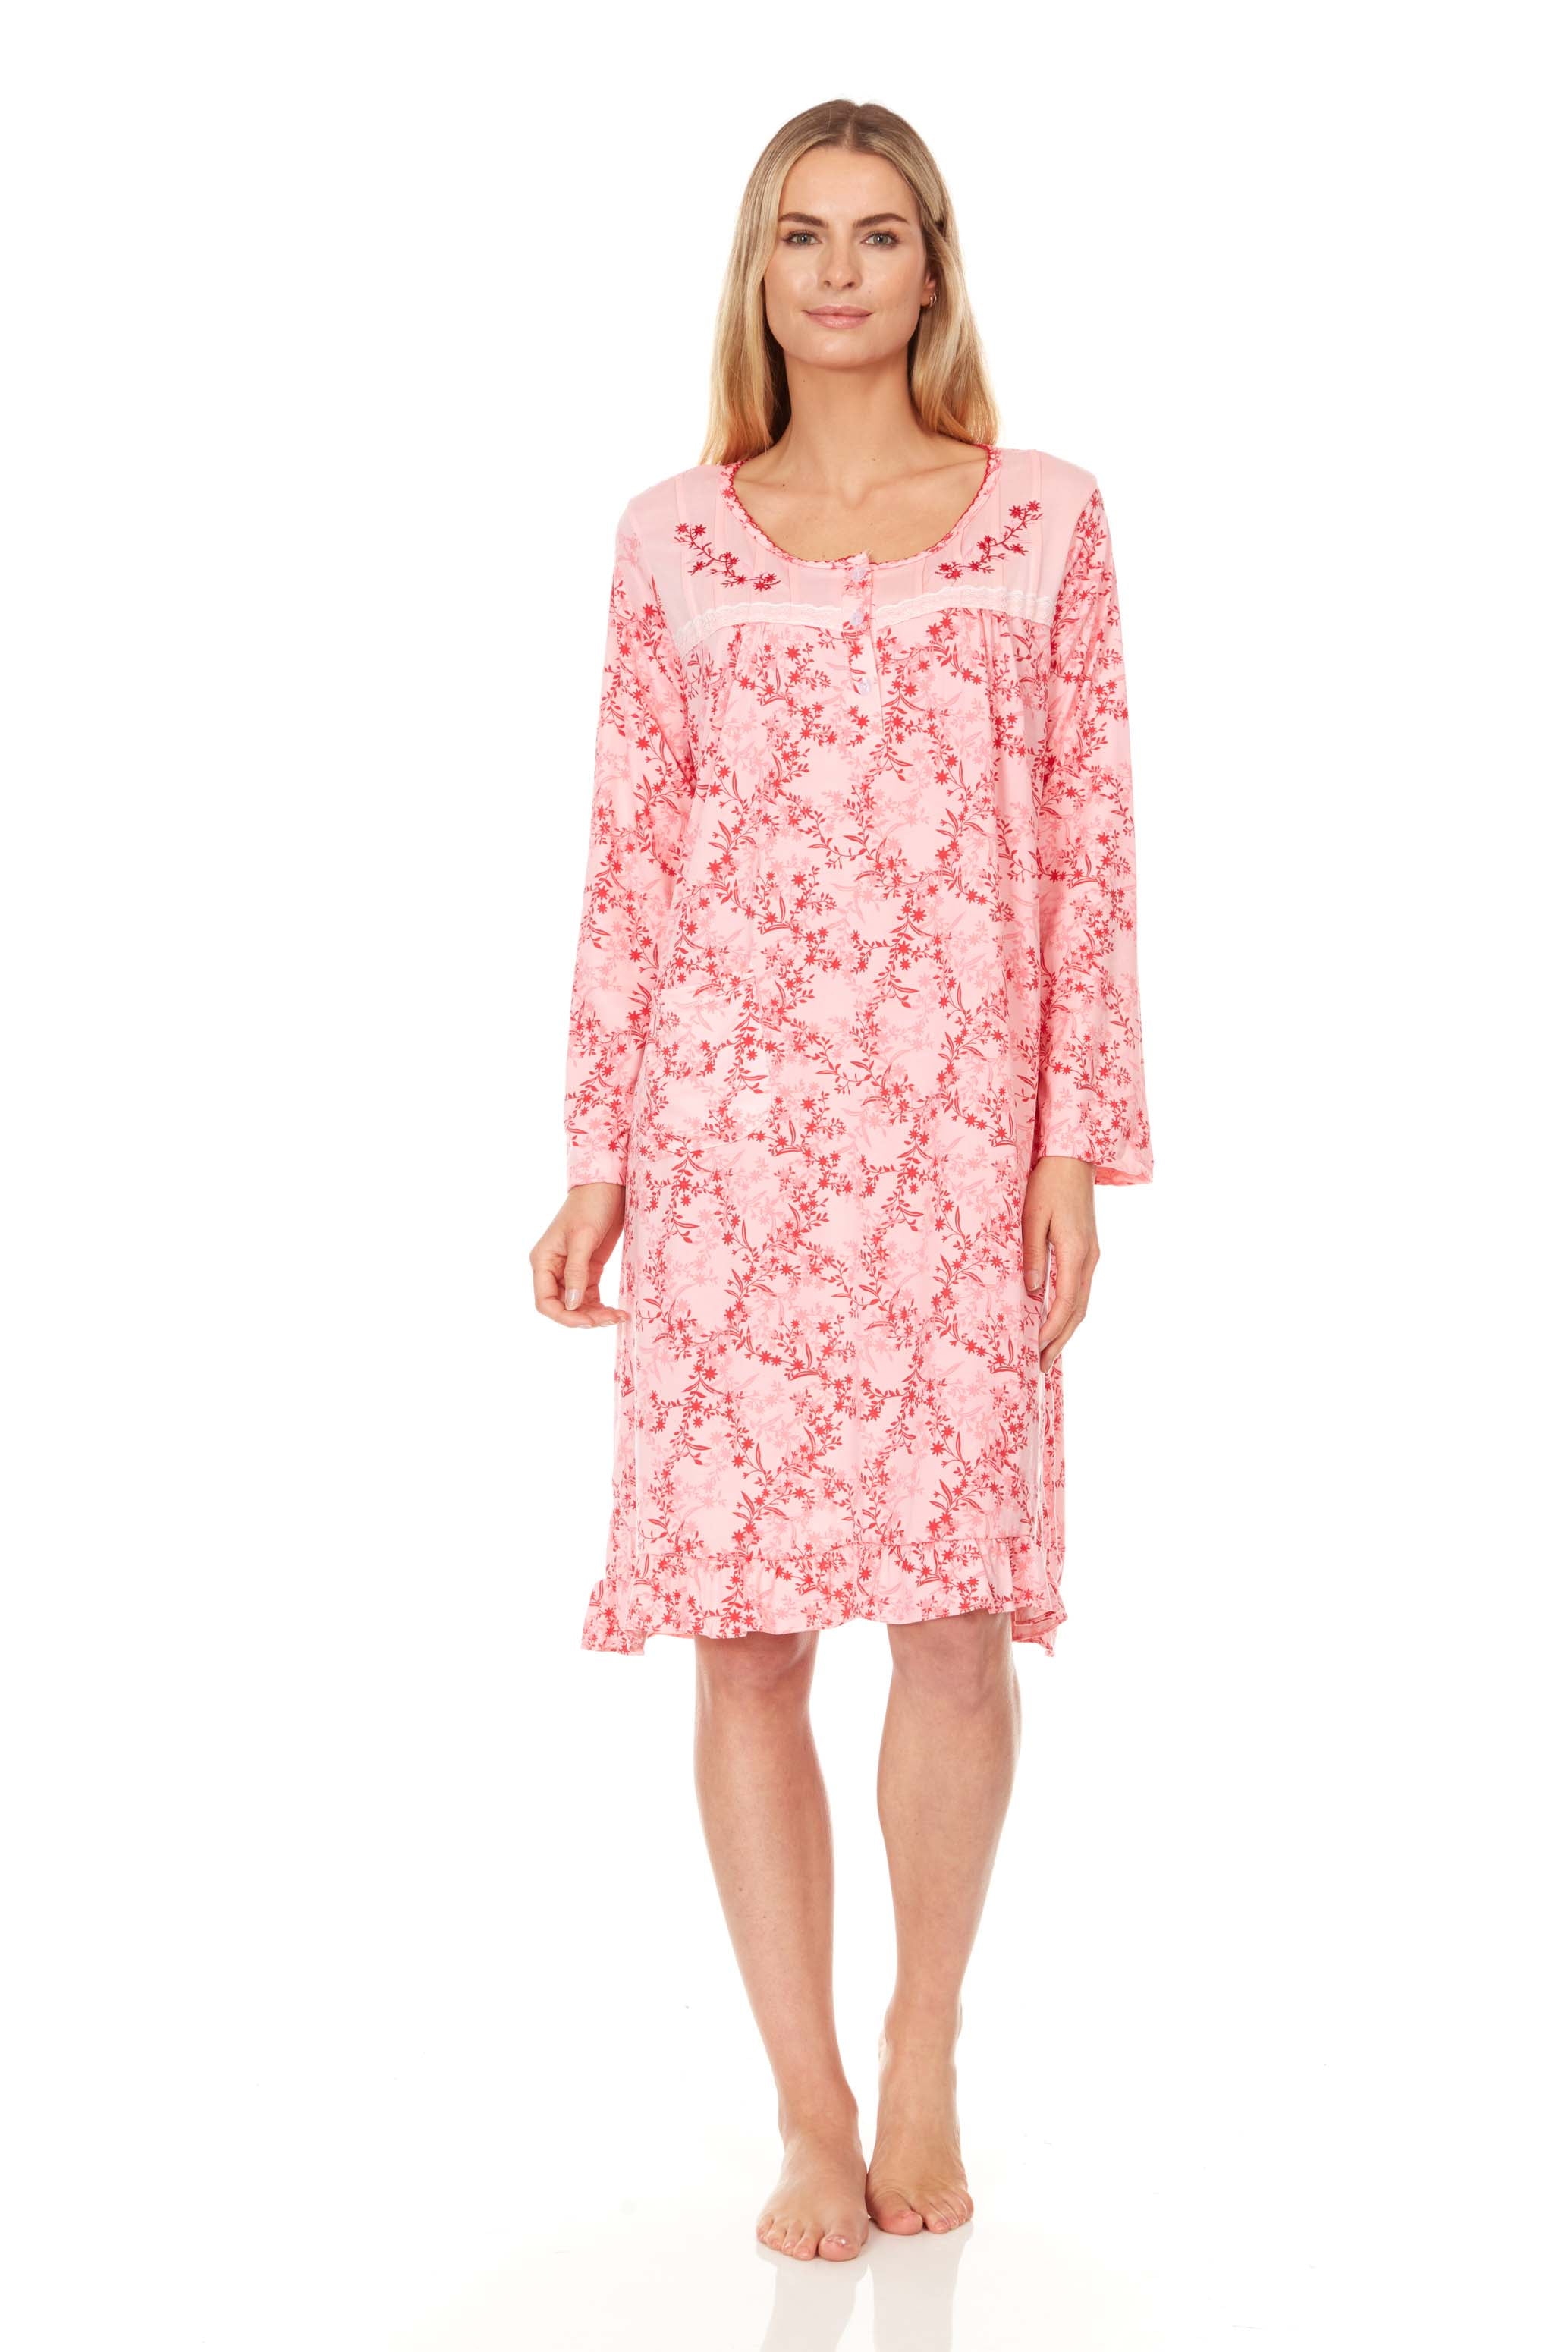 6013 Womens Nightgown Sleepwear Pajamas Woman Long Sleeve Sleep Dress ...